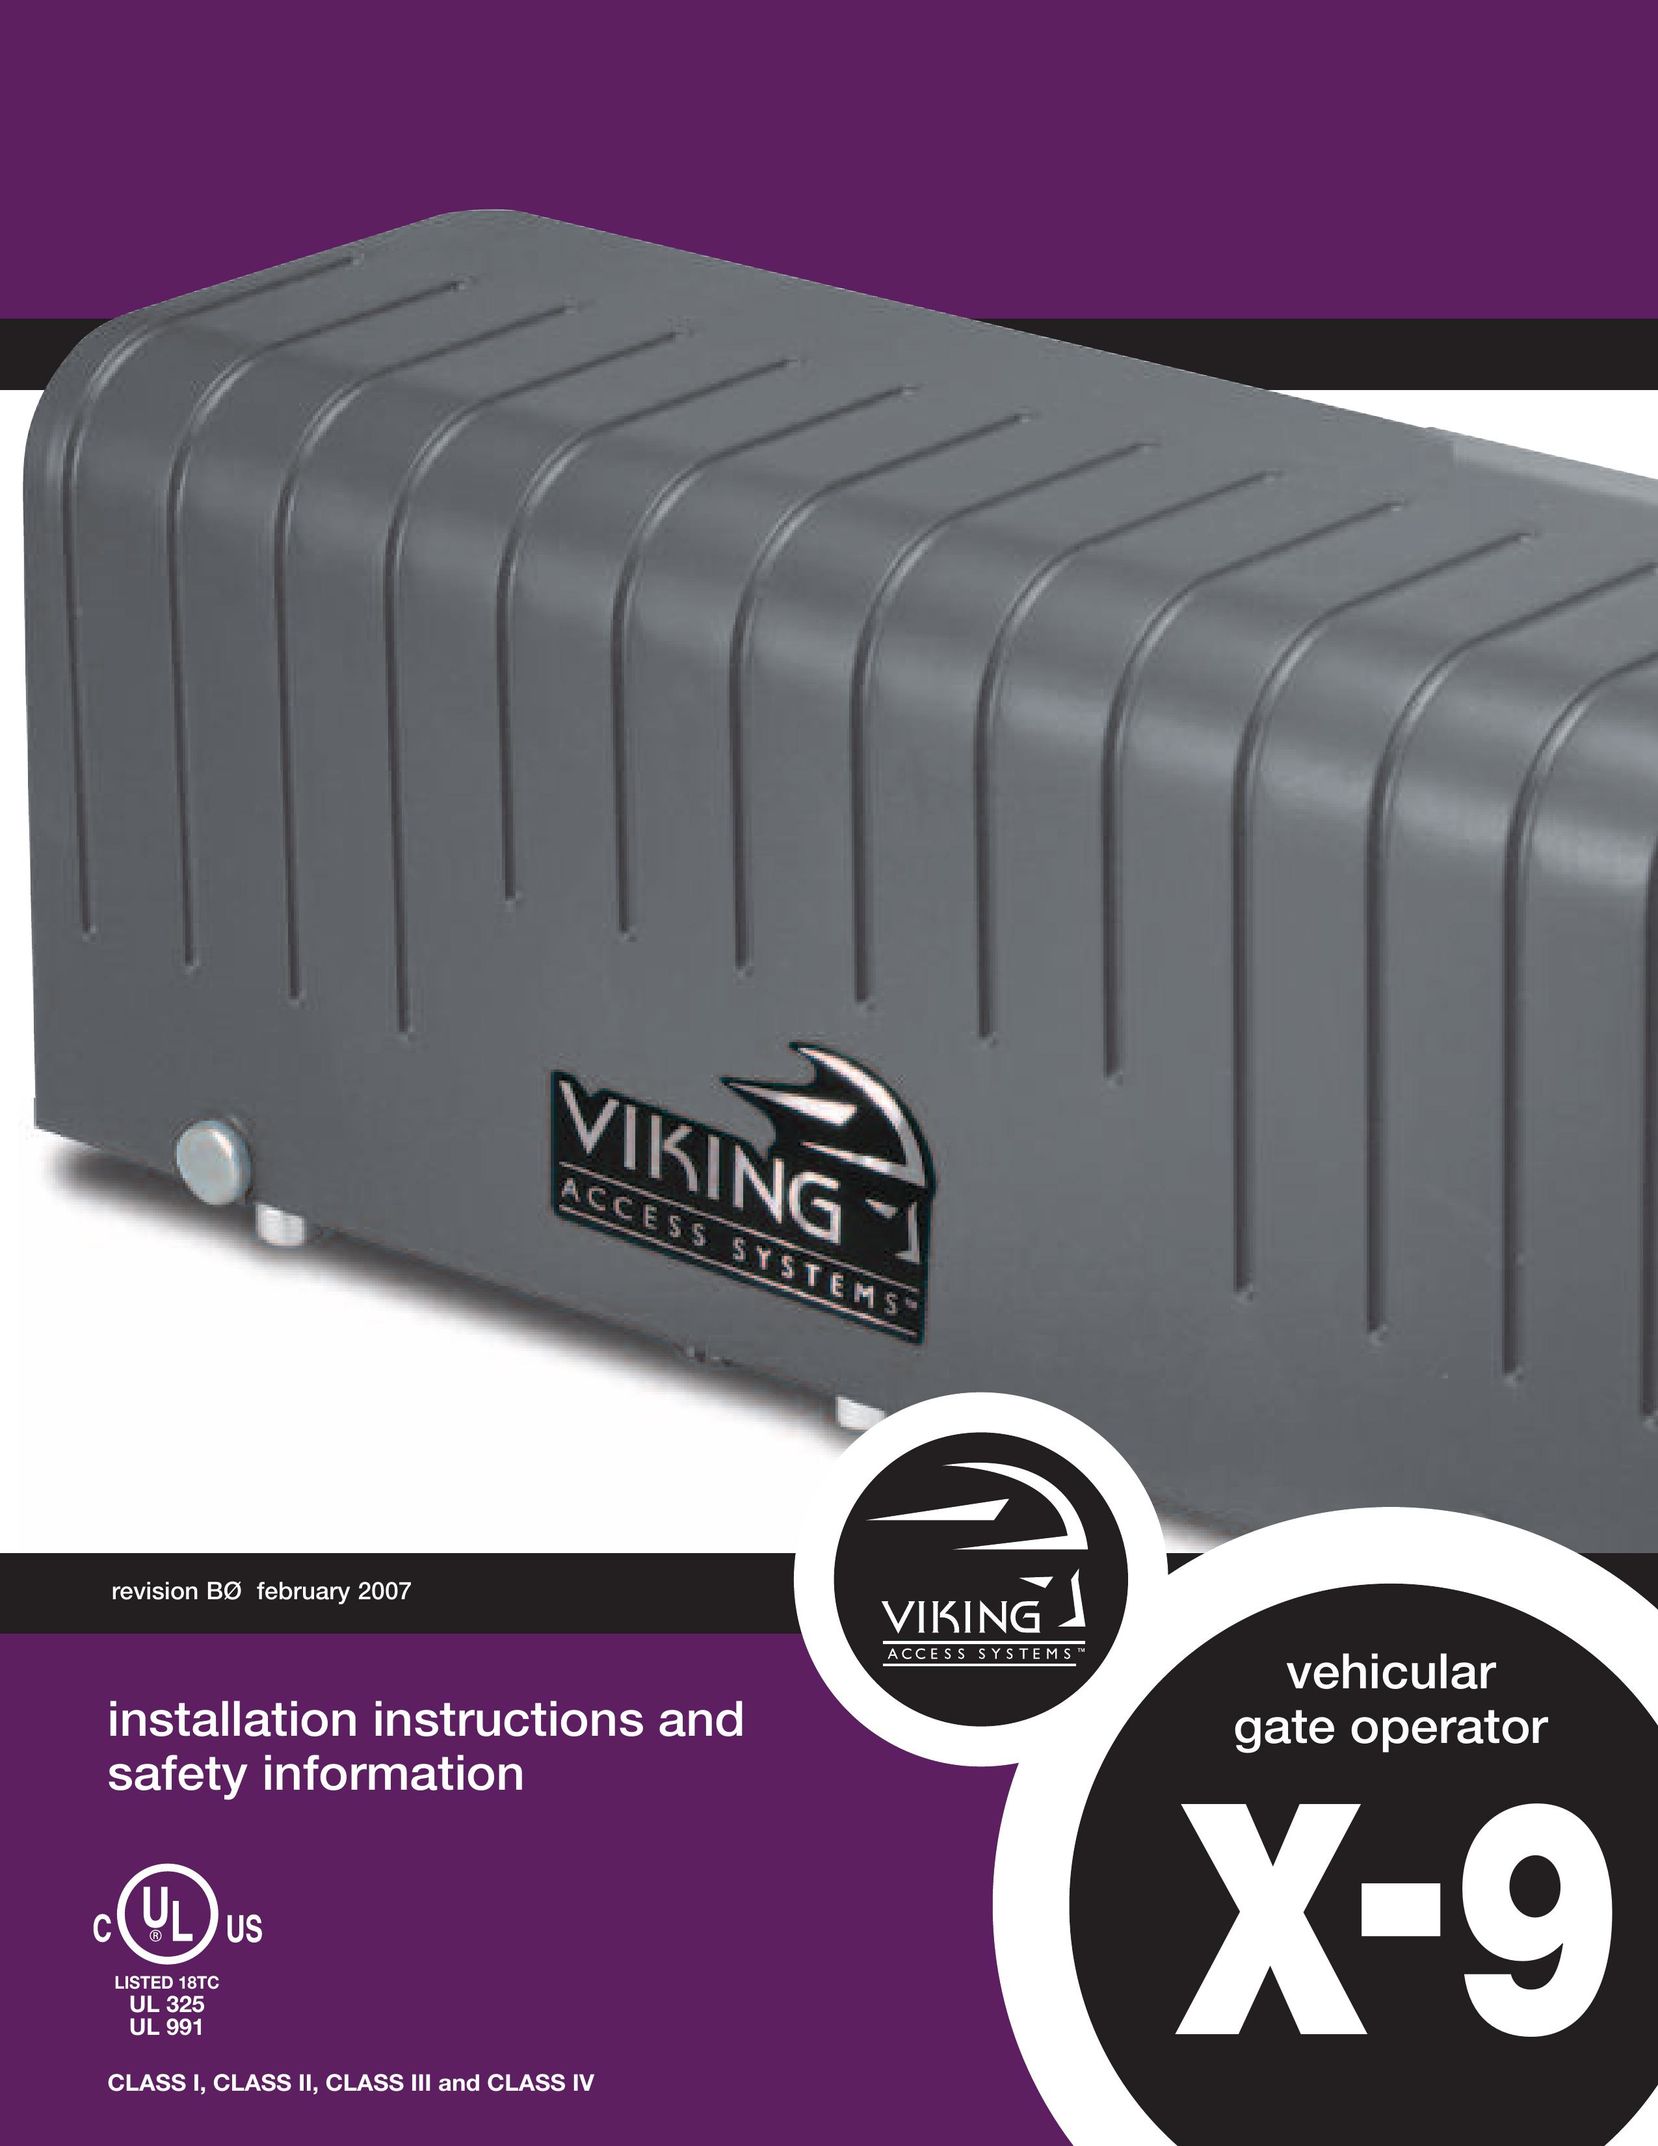 Viking Access Systems UL 325 Garage Door Opener User Manual